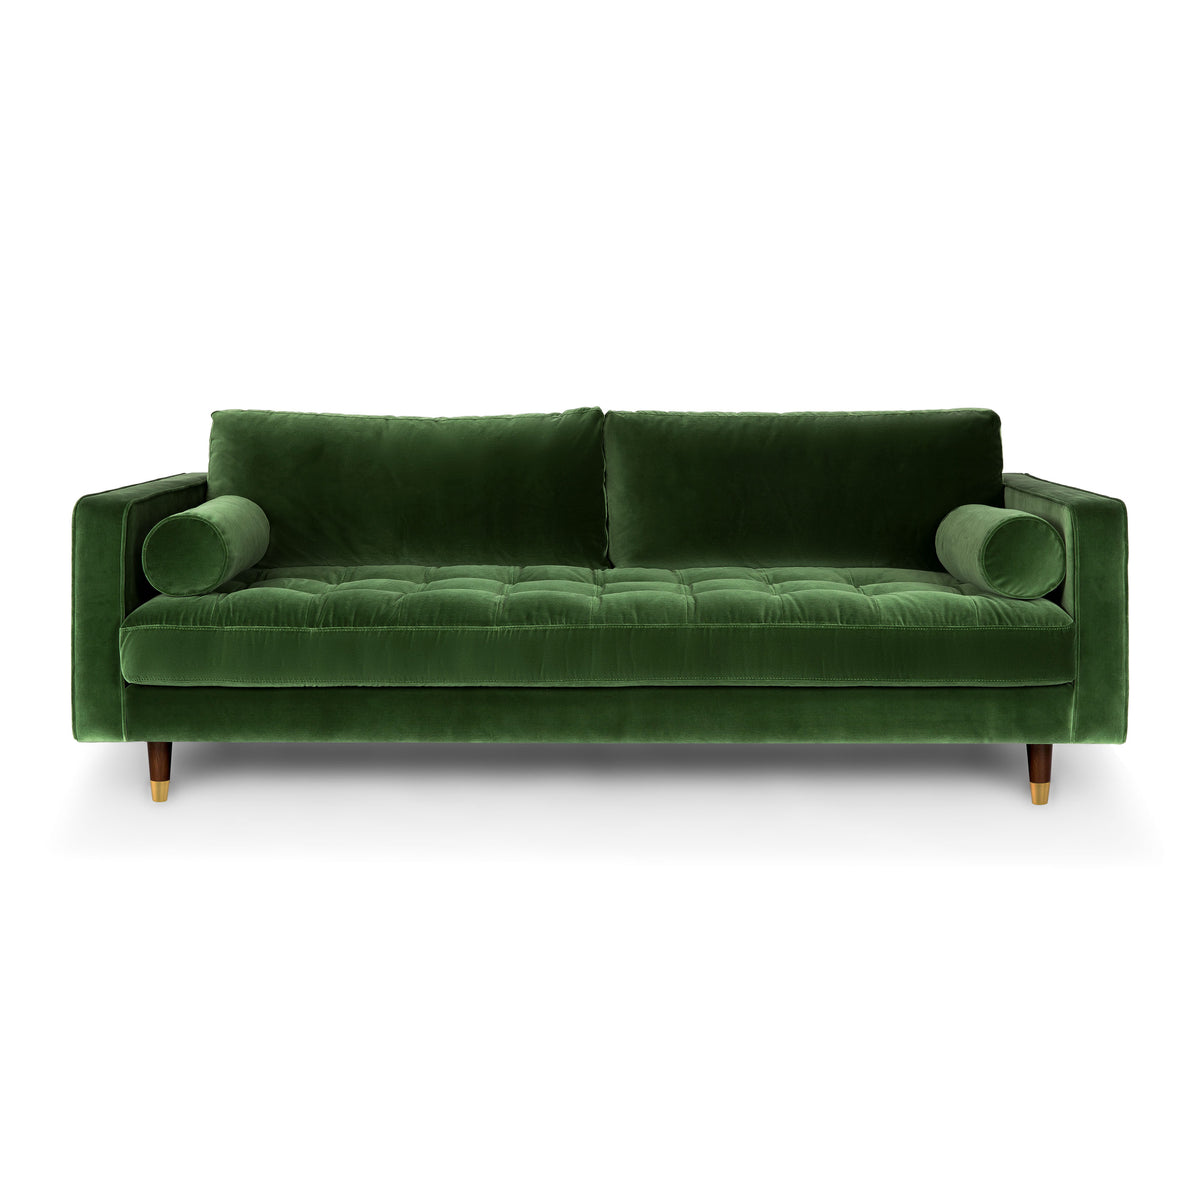 Marlowe 3 Seater Sofa